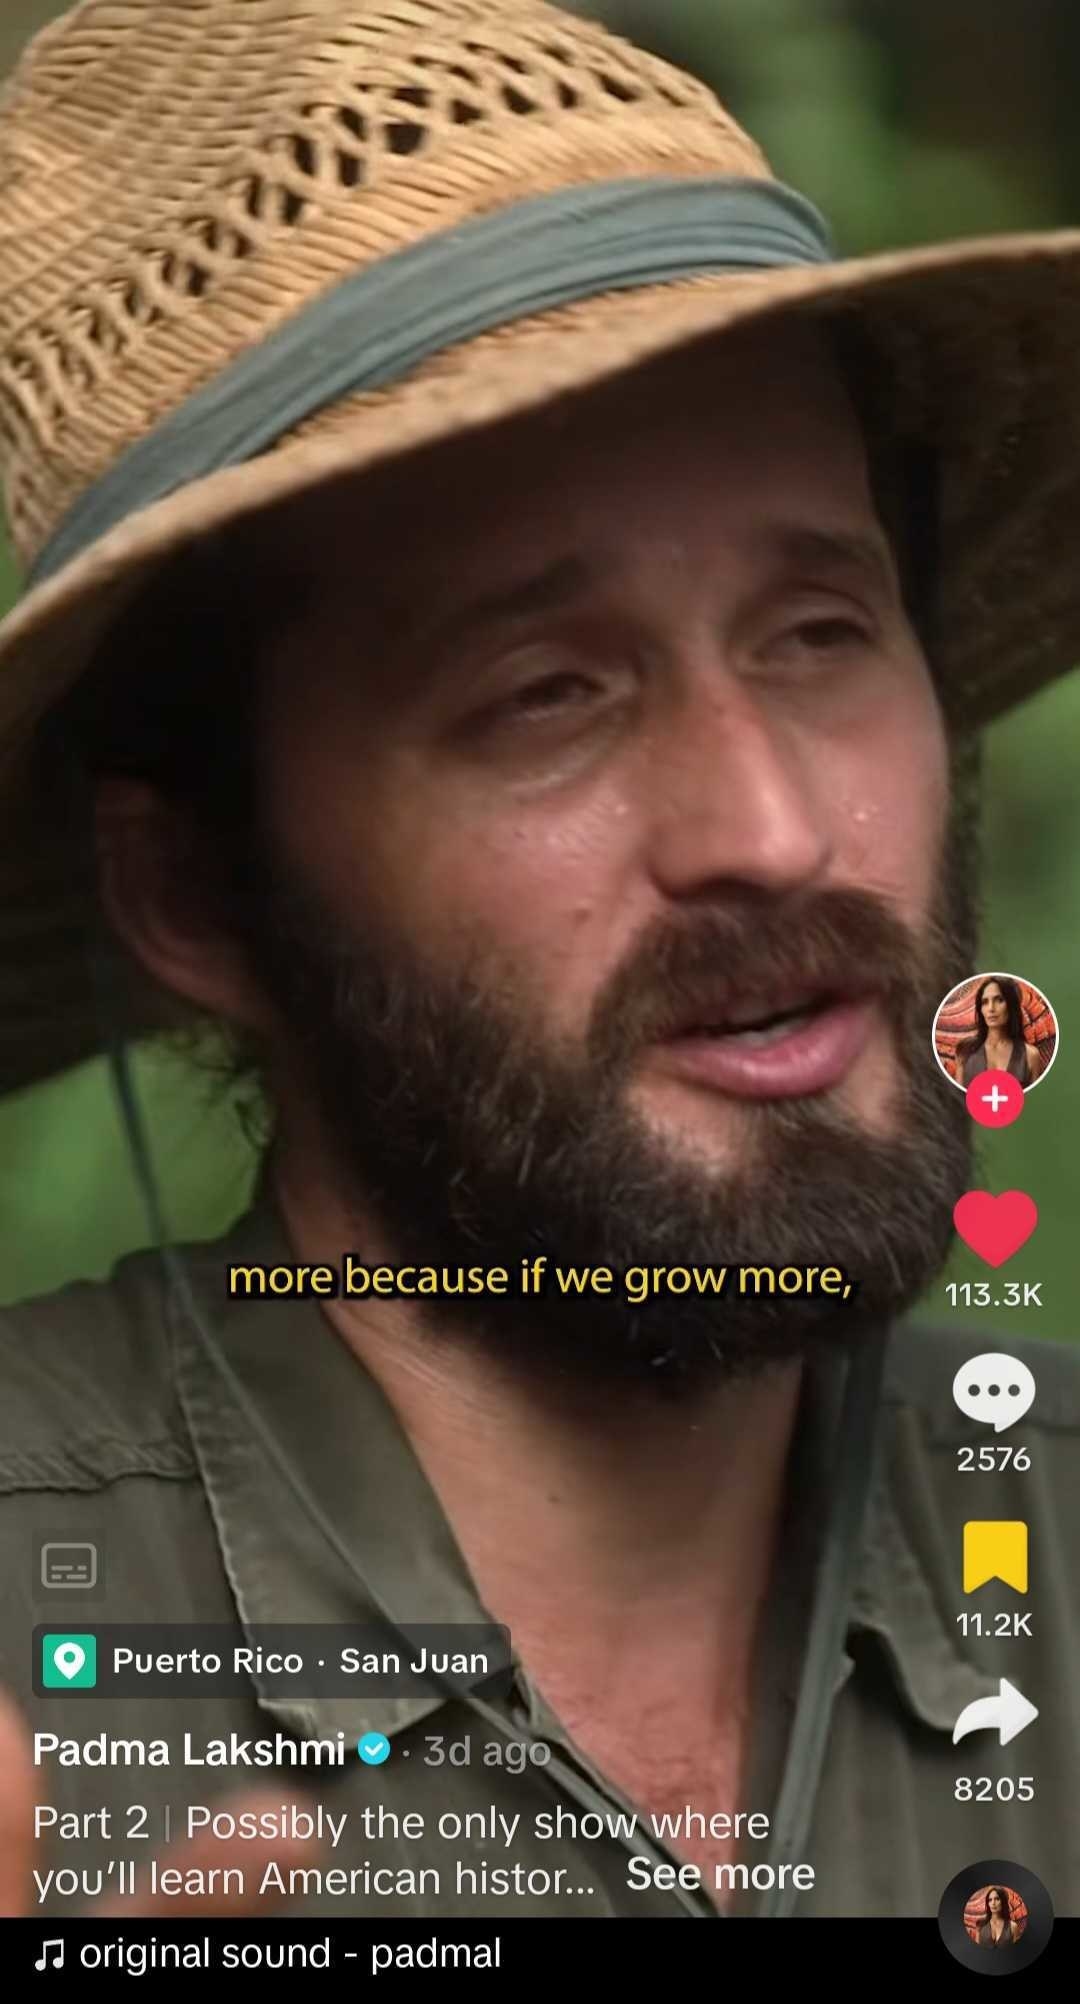 Close-up screenshot of Puerto Rican farmer